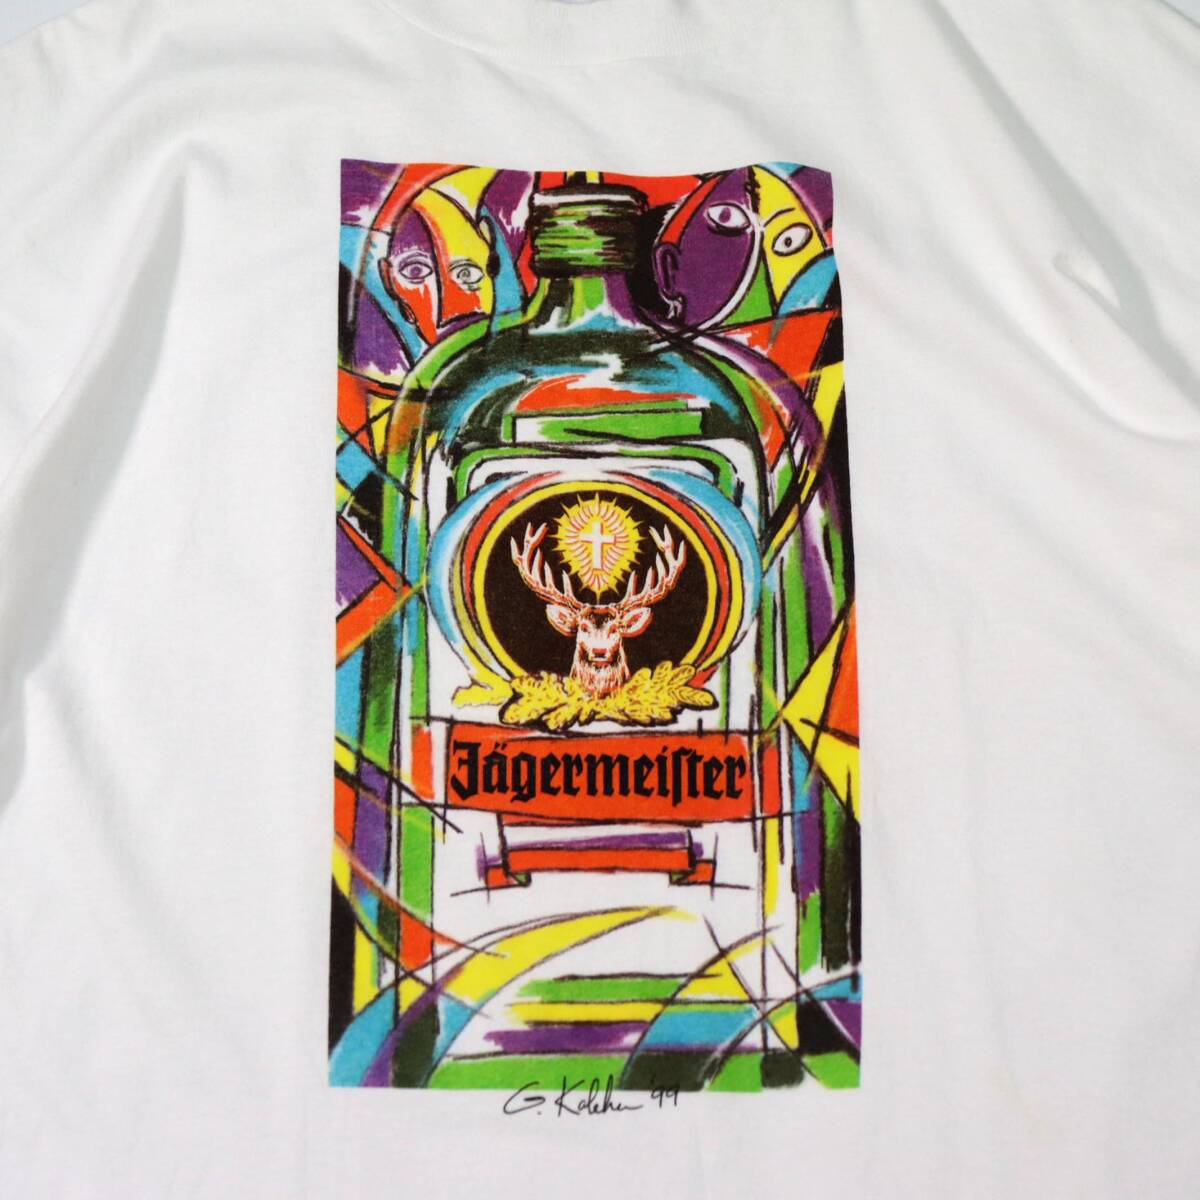 [XL] 99' G.Kalehen Jagermeister ピカソ風 アート プリント Tシャツ 白 Tultex 企業 酒 イエーガーマスター ビンテージ vintage 90s_画像3